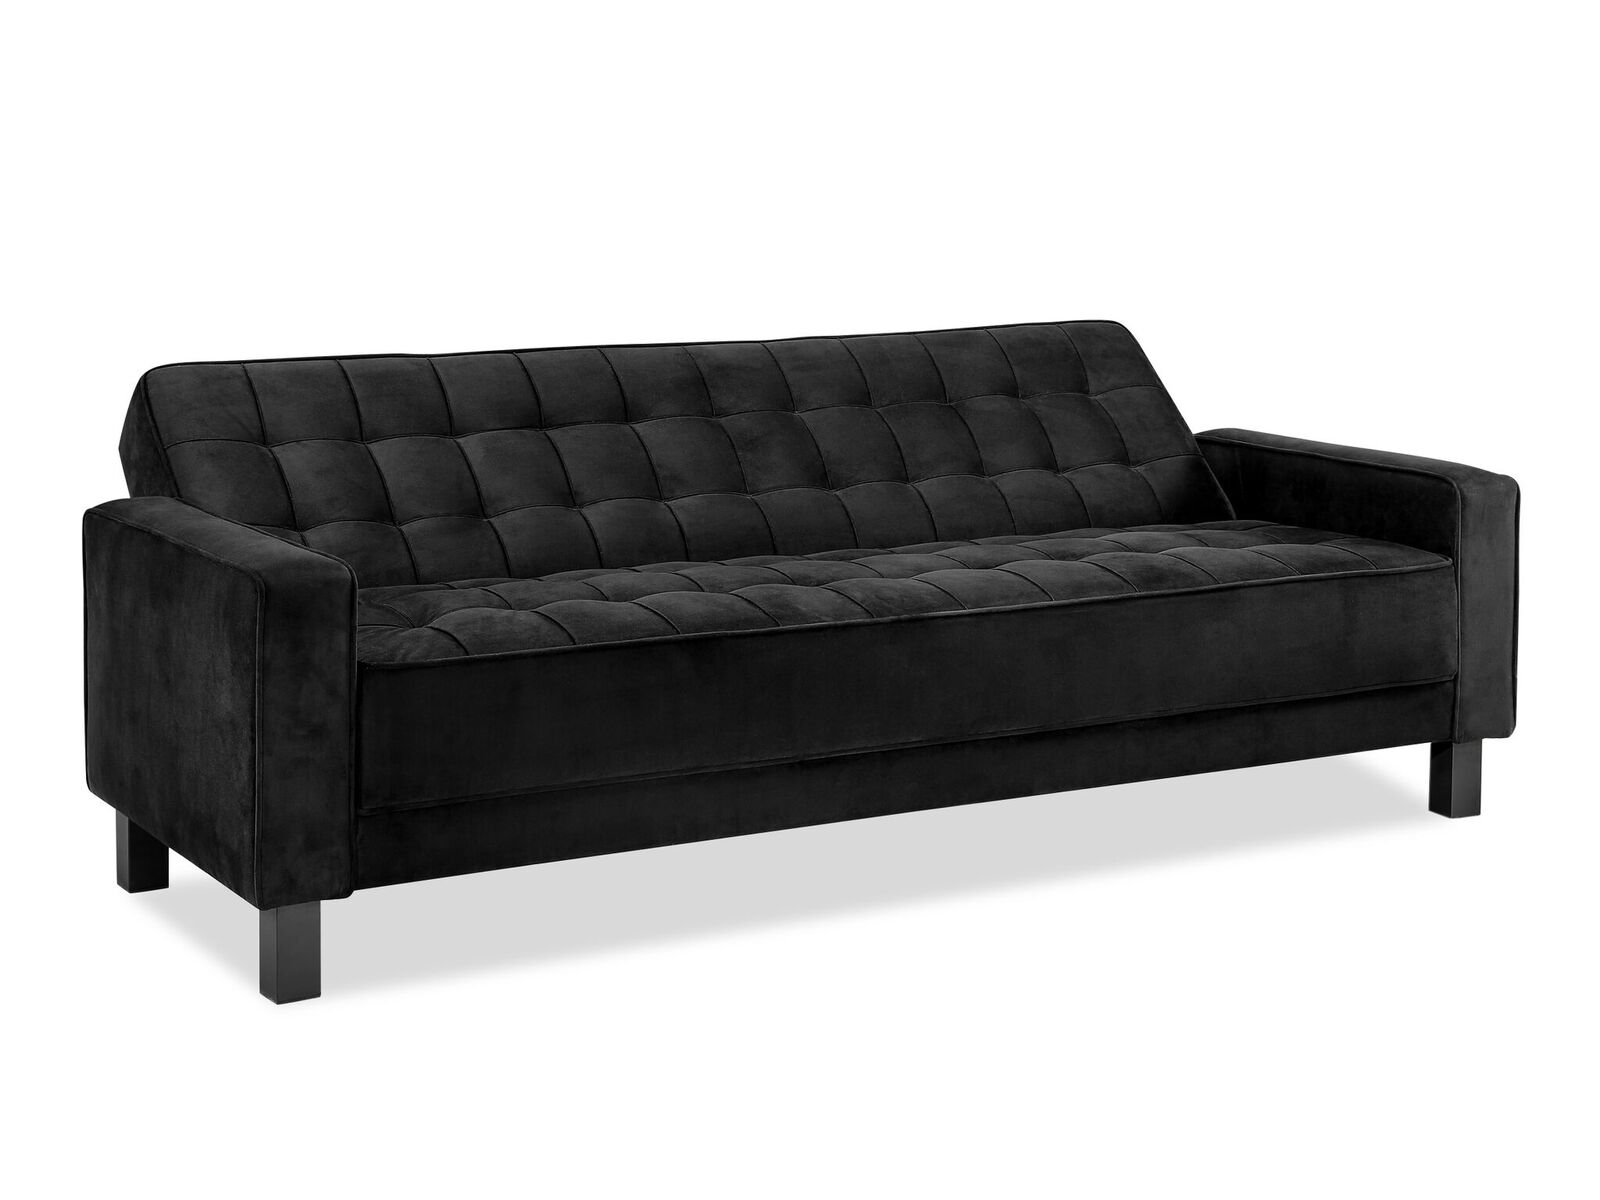 McKinley Convertible Sofa Black by Serta Lifestyle